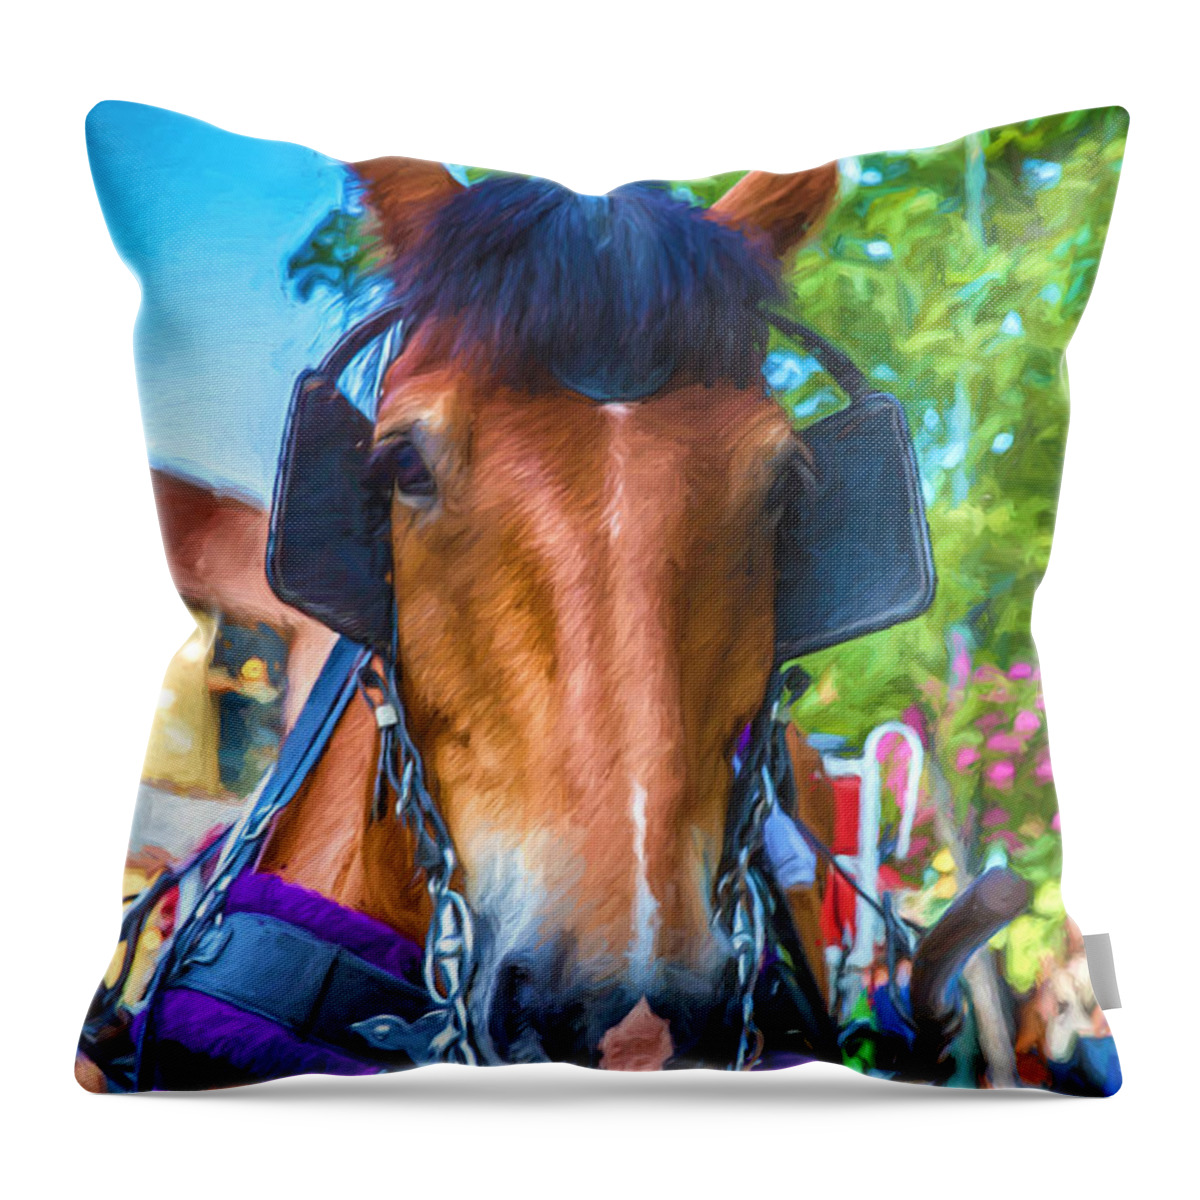 Horse Throw Pillow featuring the digital art A Horse of Course by John Haldane